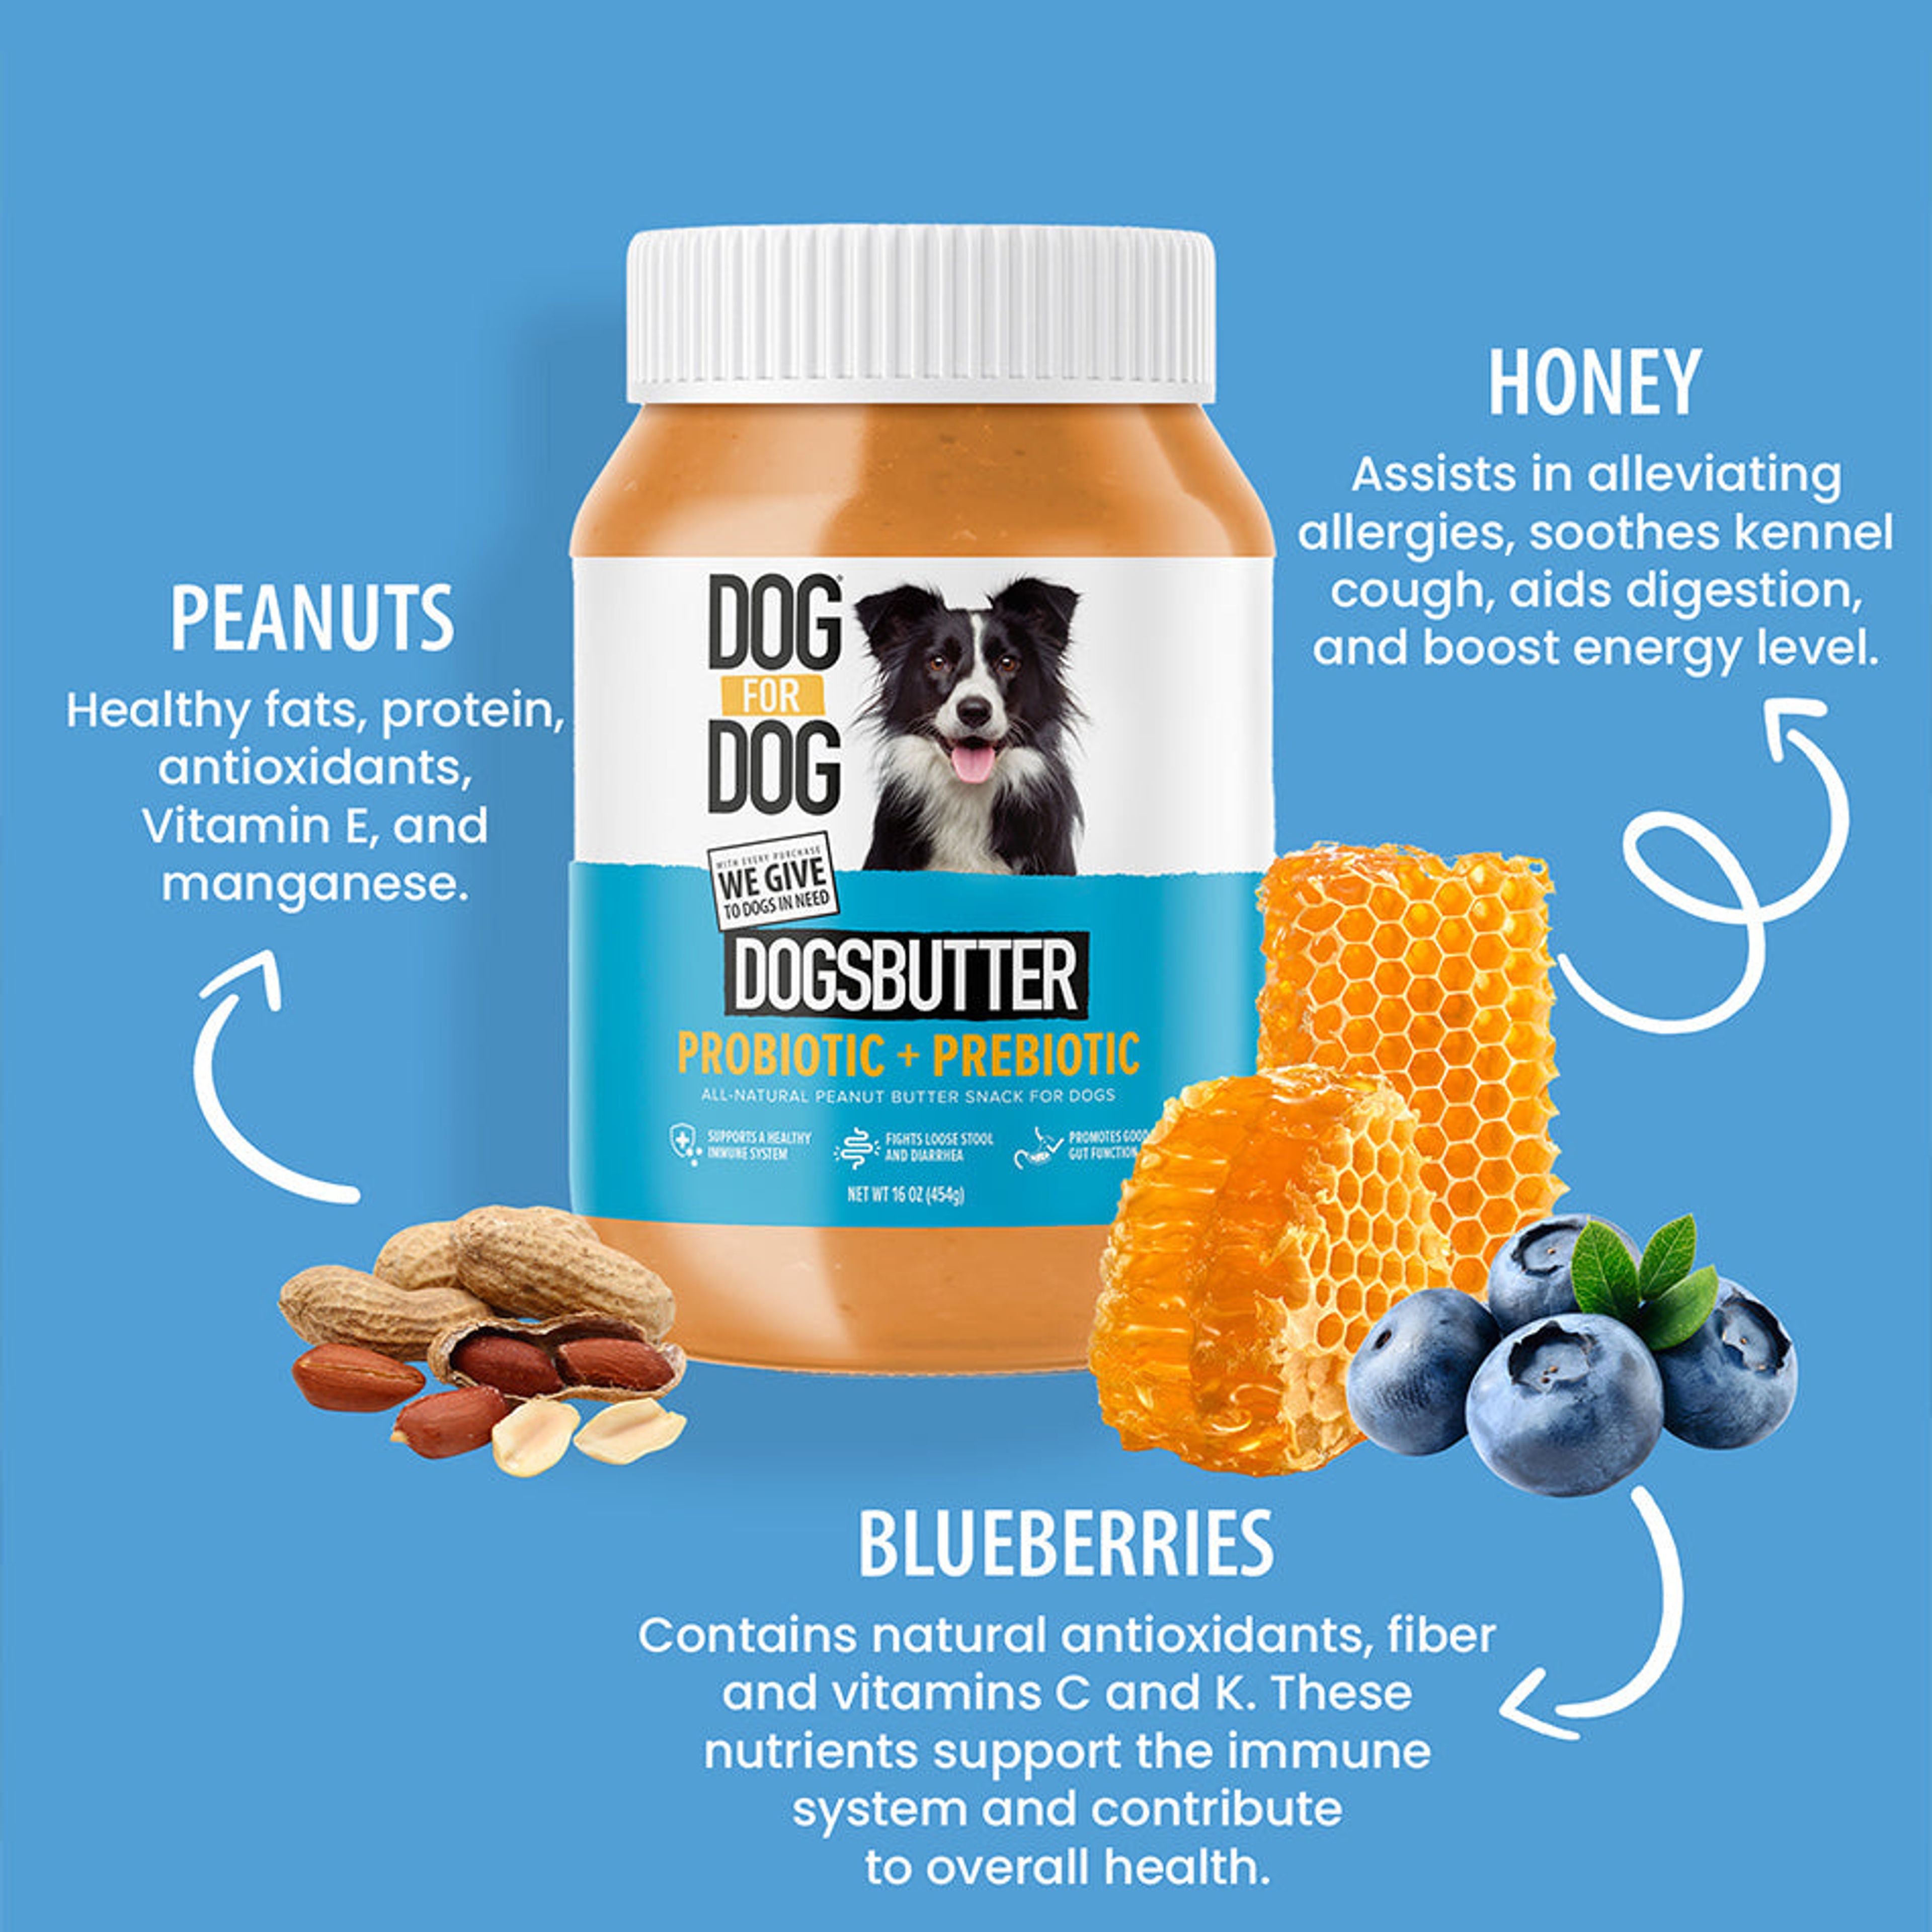 All-Natural Probiotic & Prebiotic DogsButter 16oz